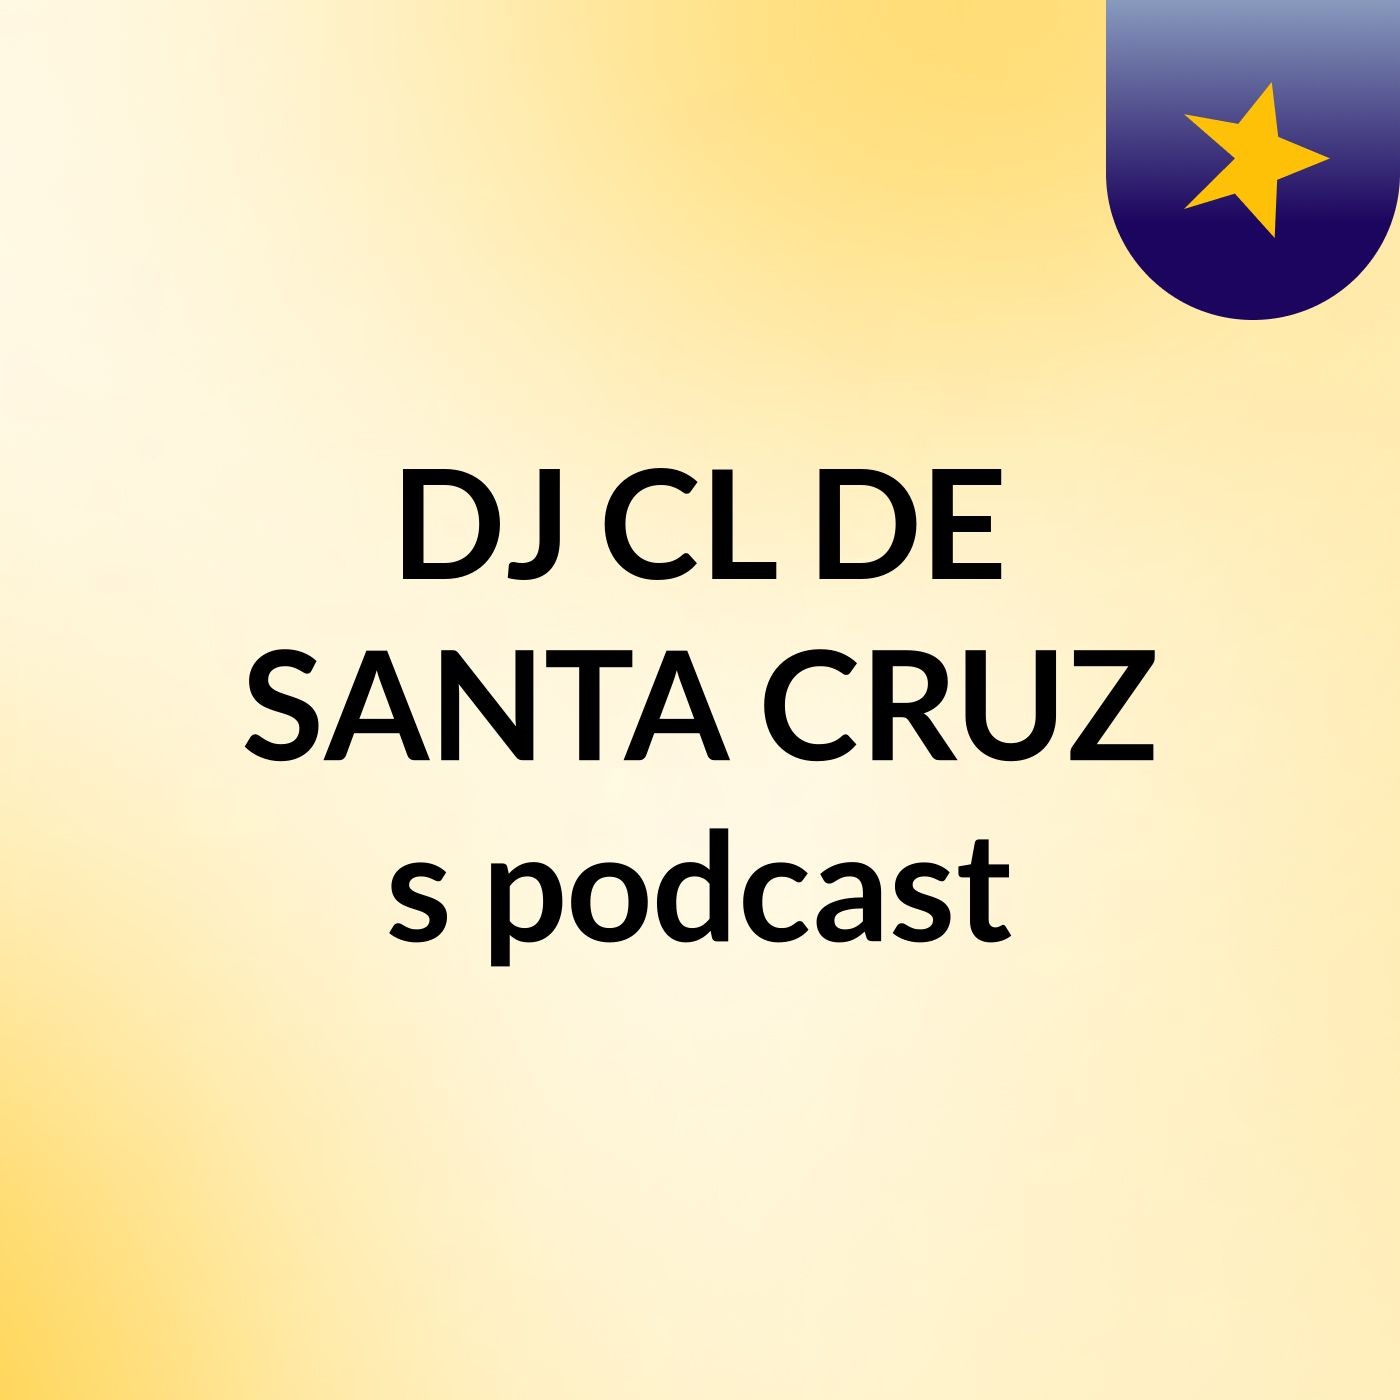 DJ CL DE SANTA CRUZ's podcast